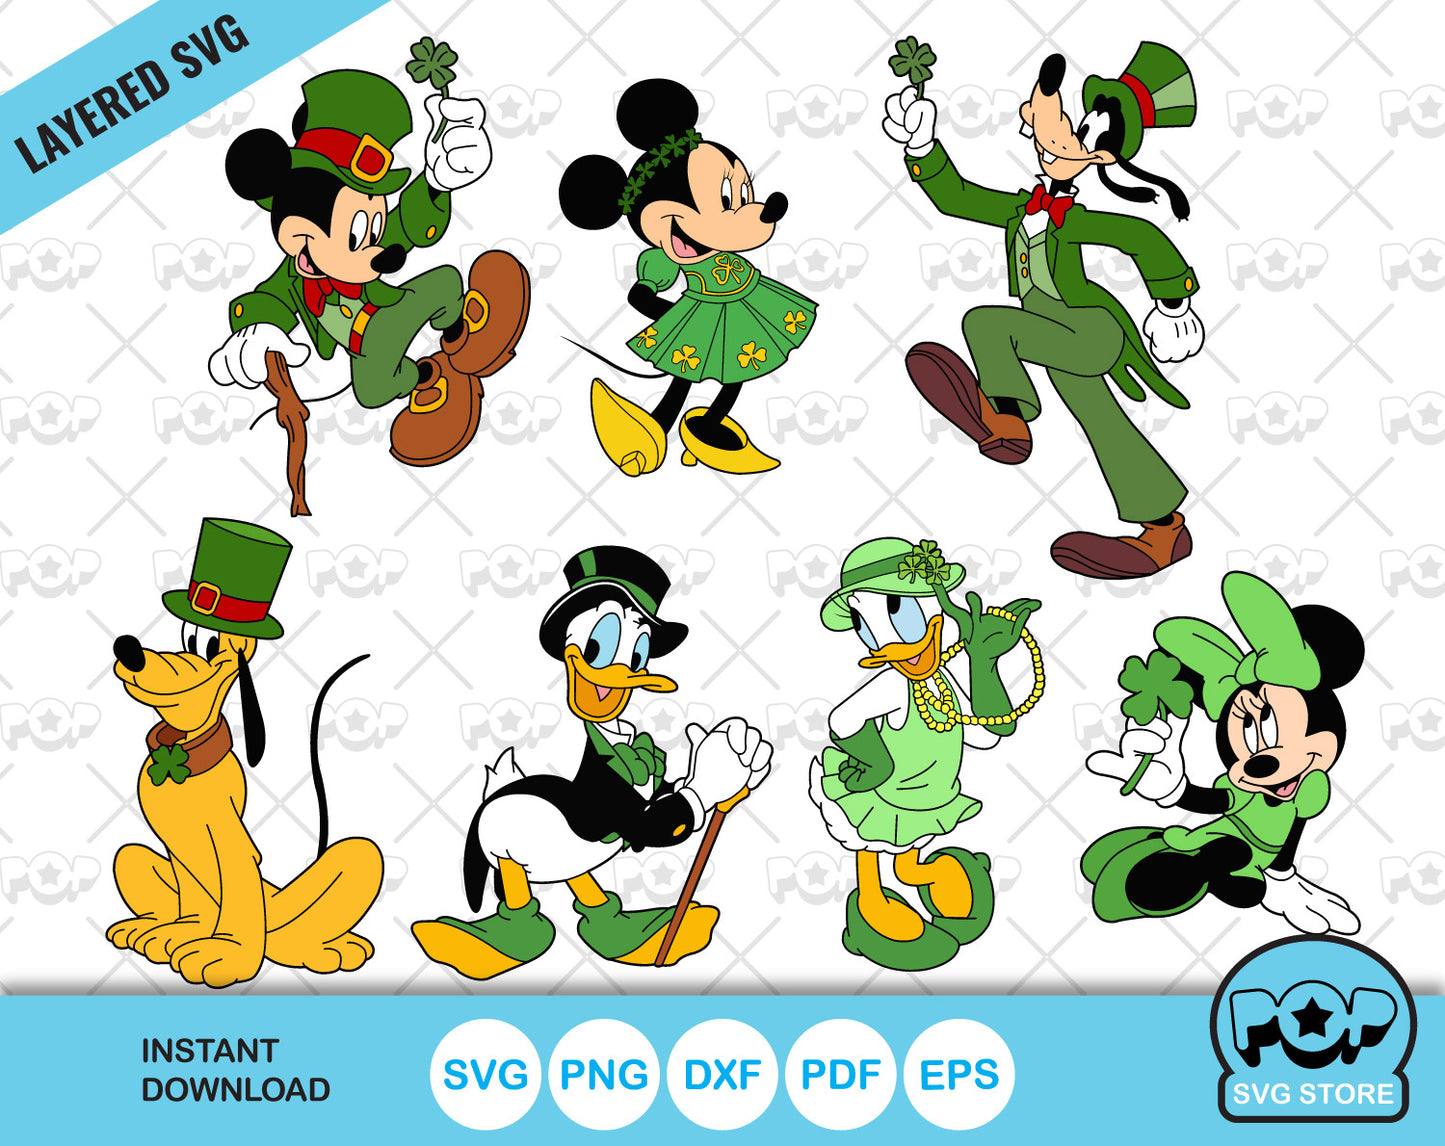 Mickey Saint Patrick's Day clipart bundle, SVG cut files for Cricut / Silhouette, instant download